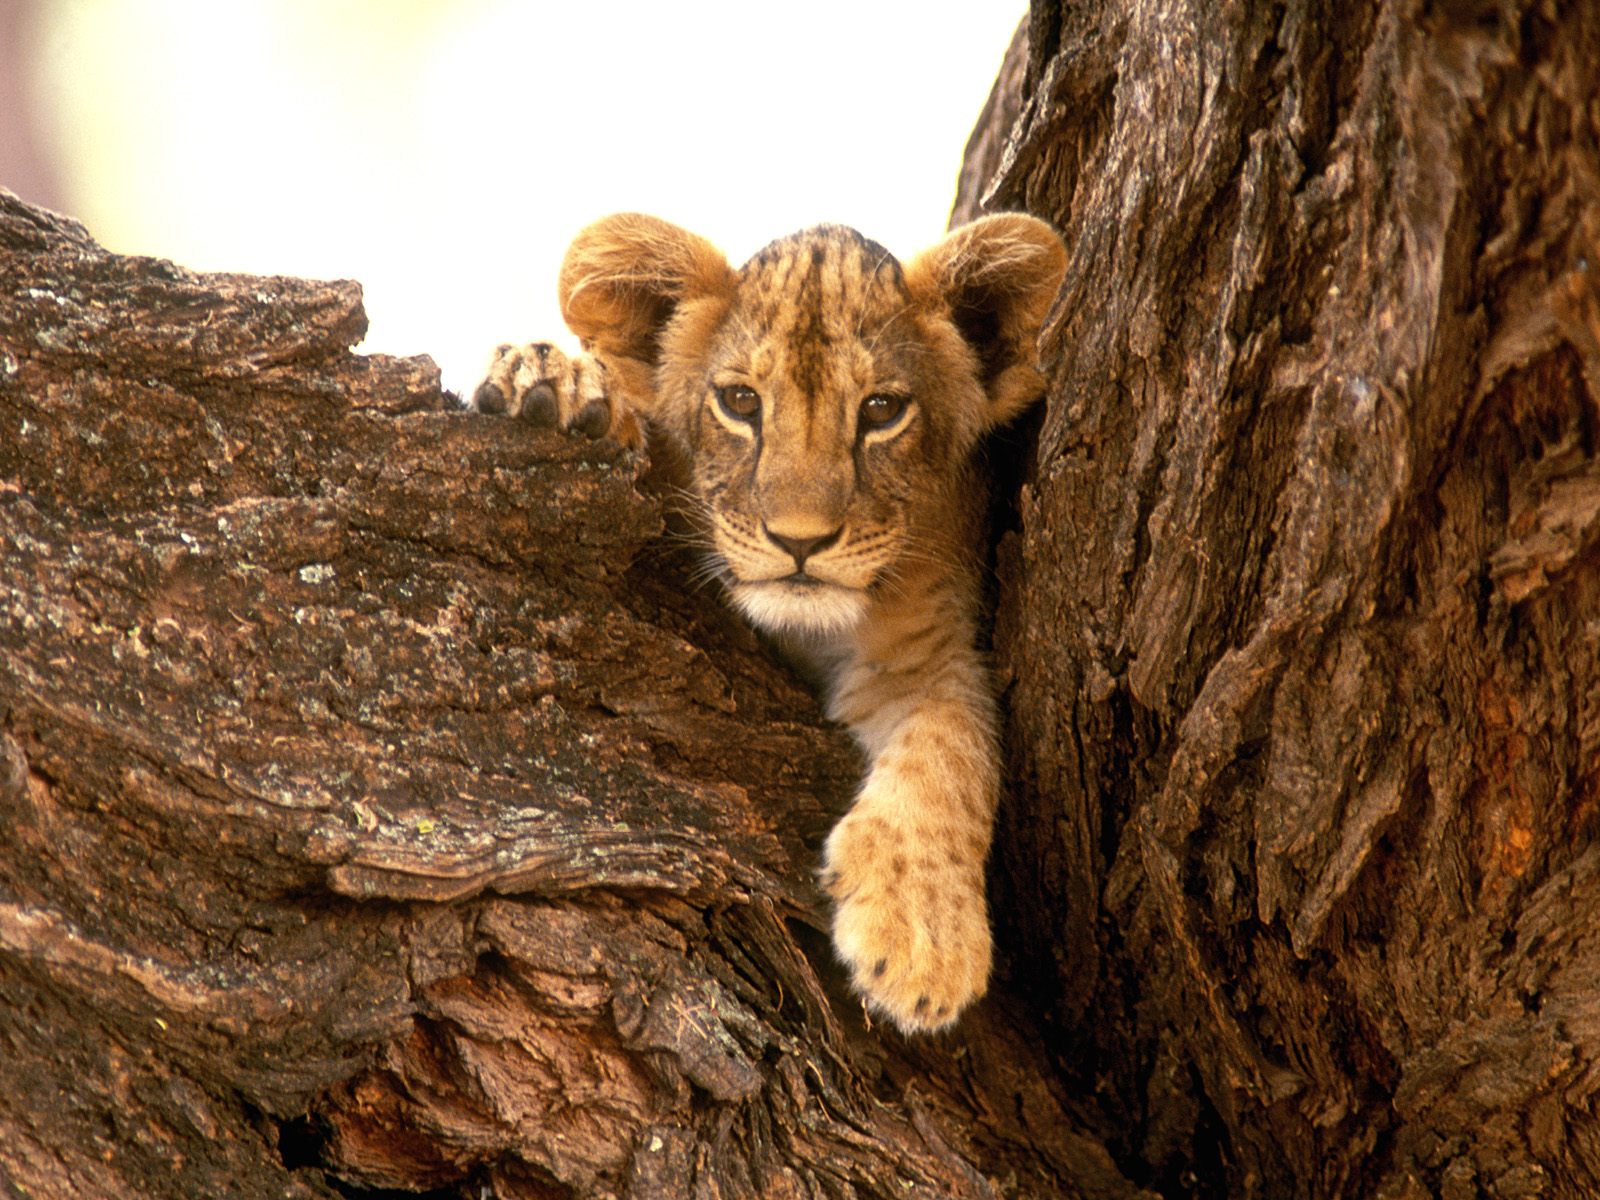 A Furry Friend, Lion Cub